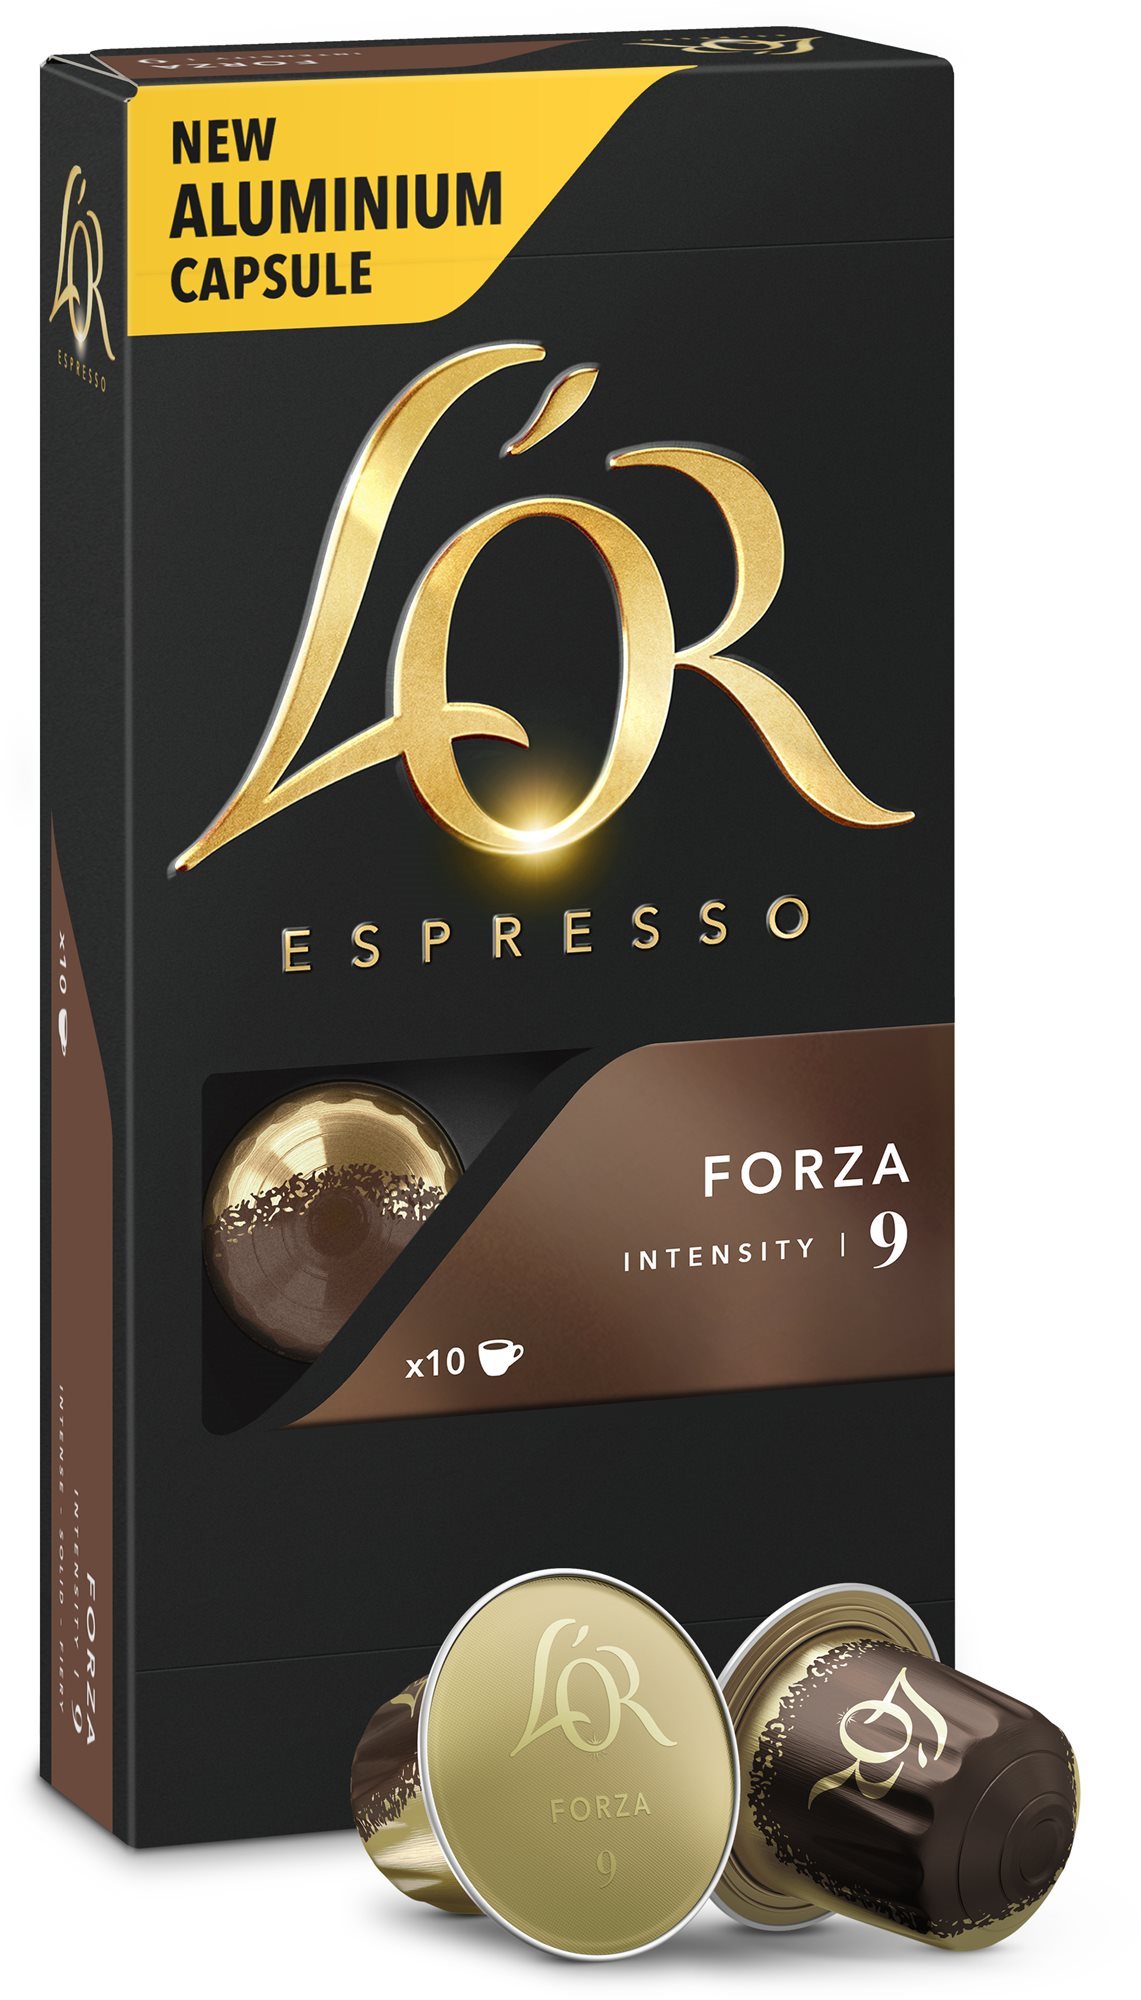 L'OR Espresso Forza 10 db, alumínium